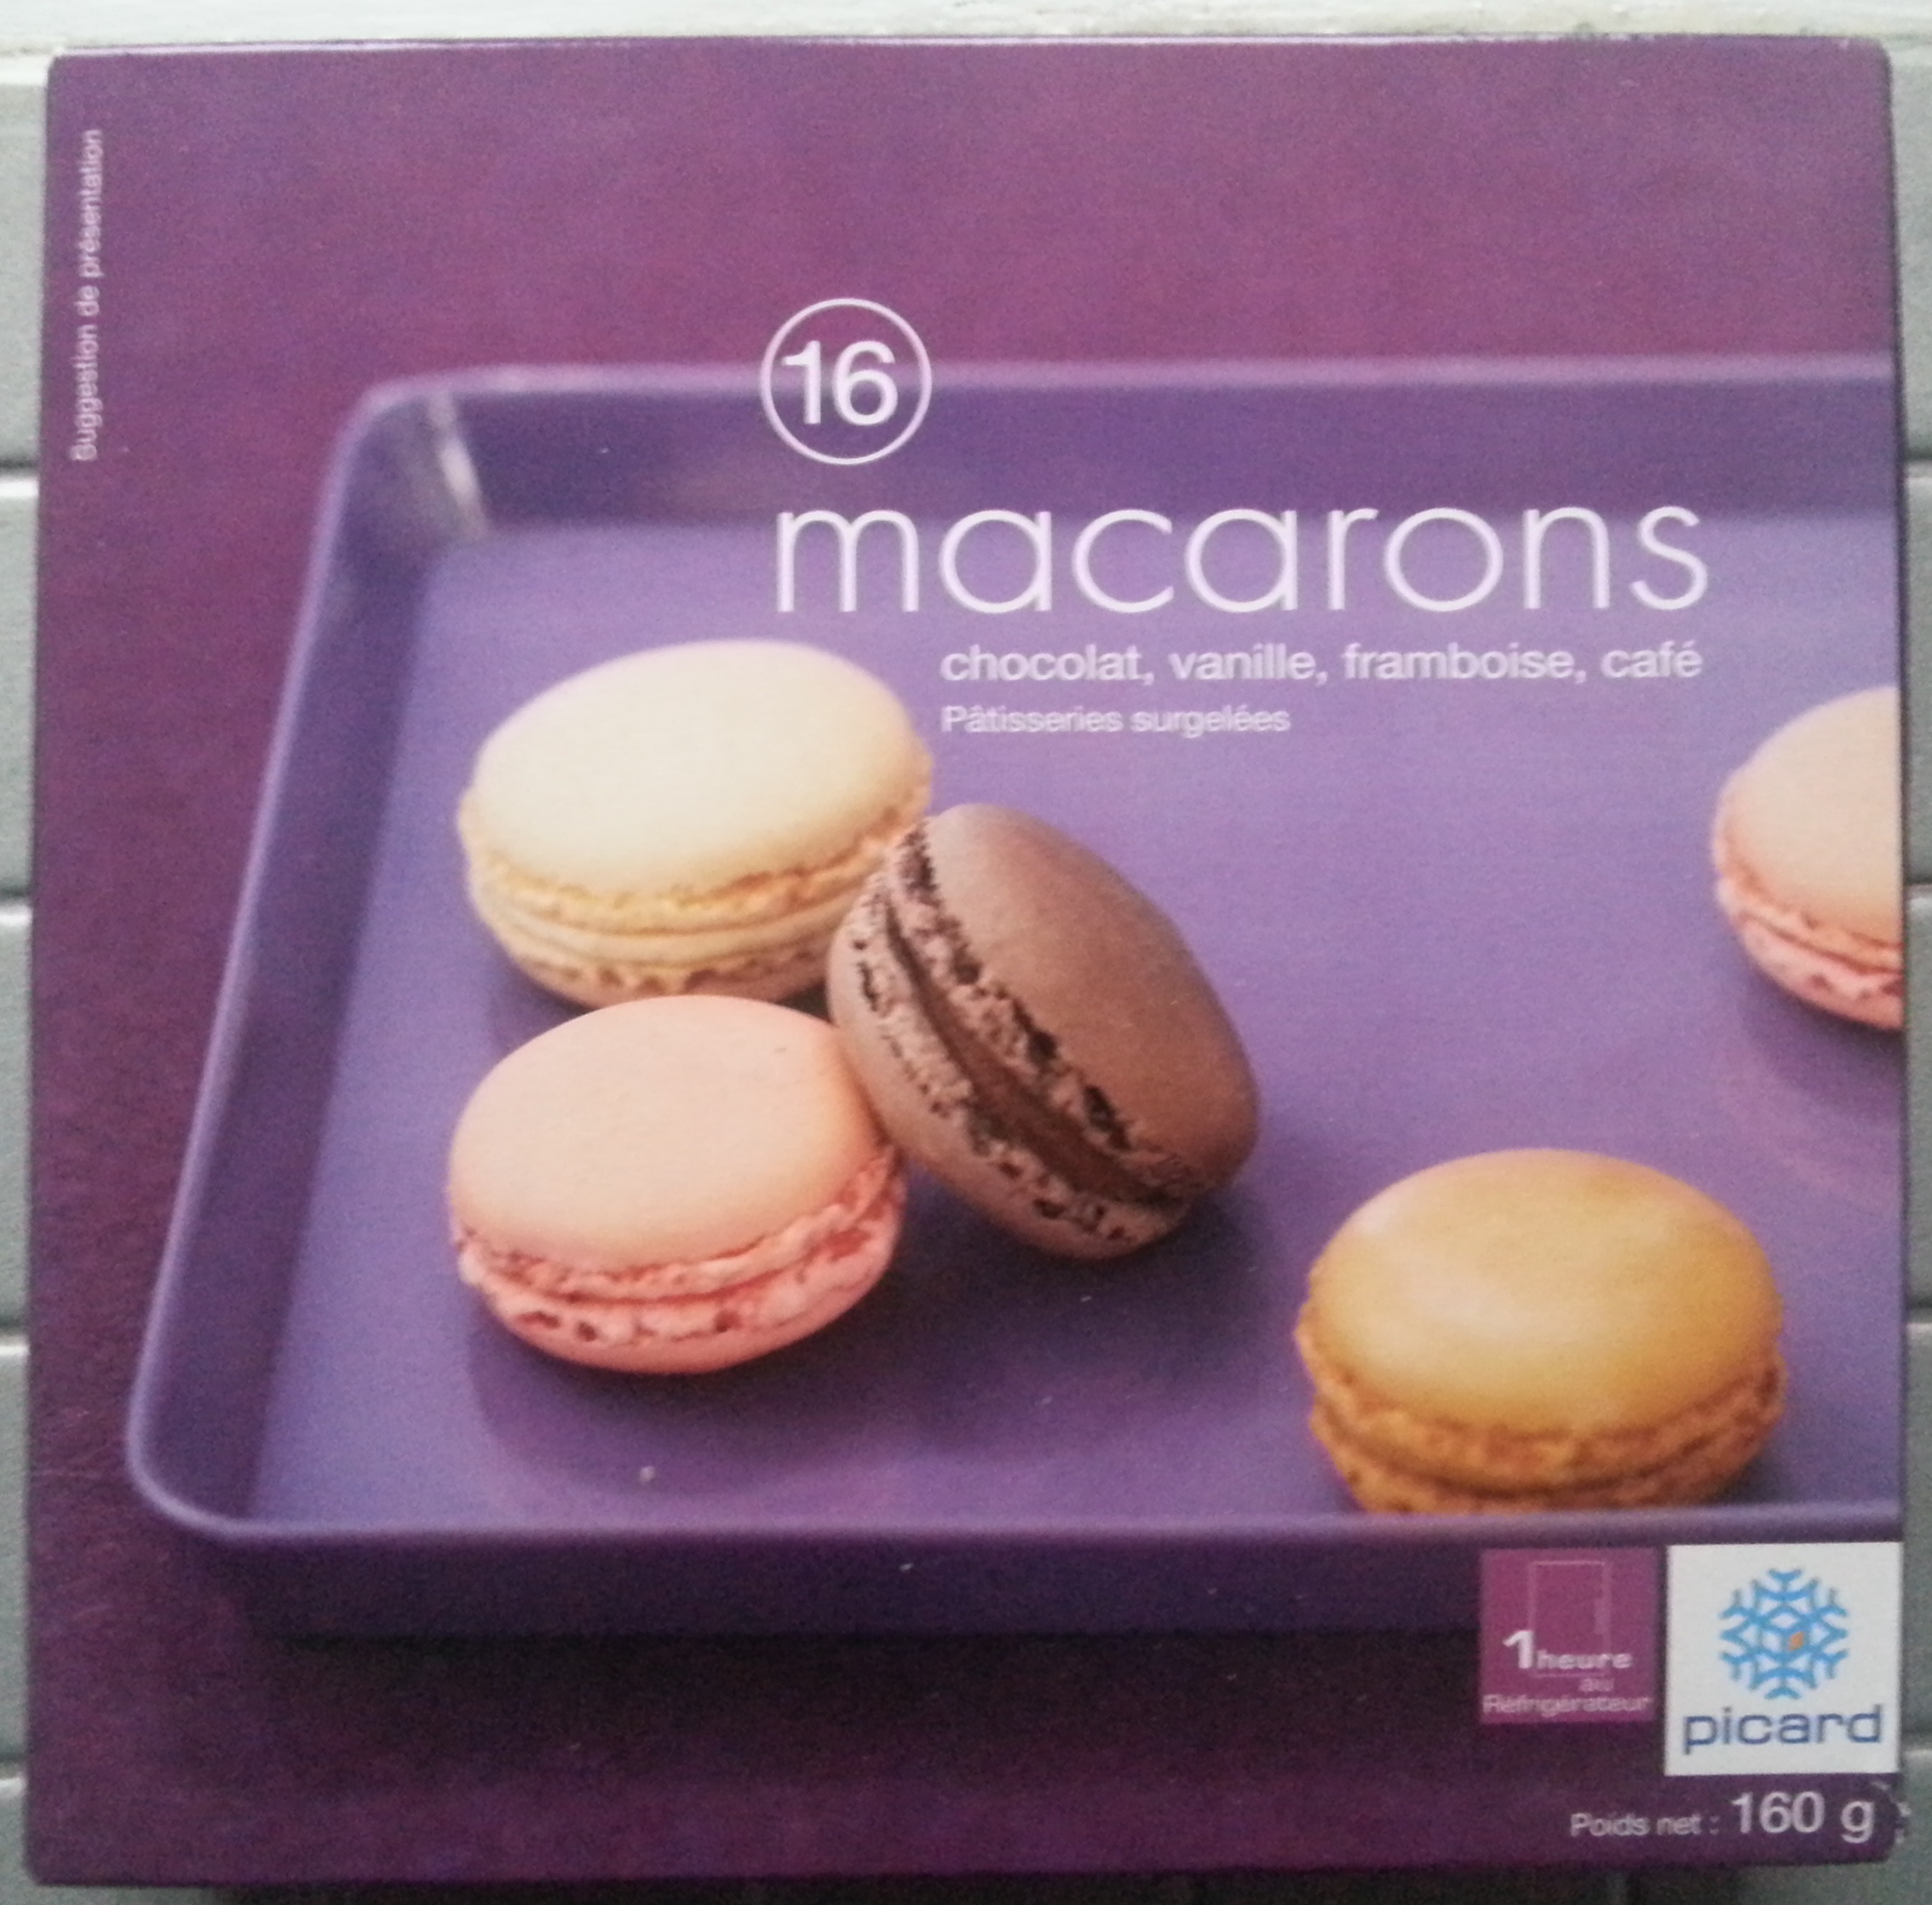 16 macarons (chocolat, vanille, framboise, café) - Product - fr